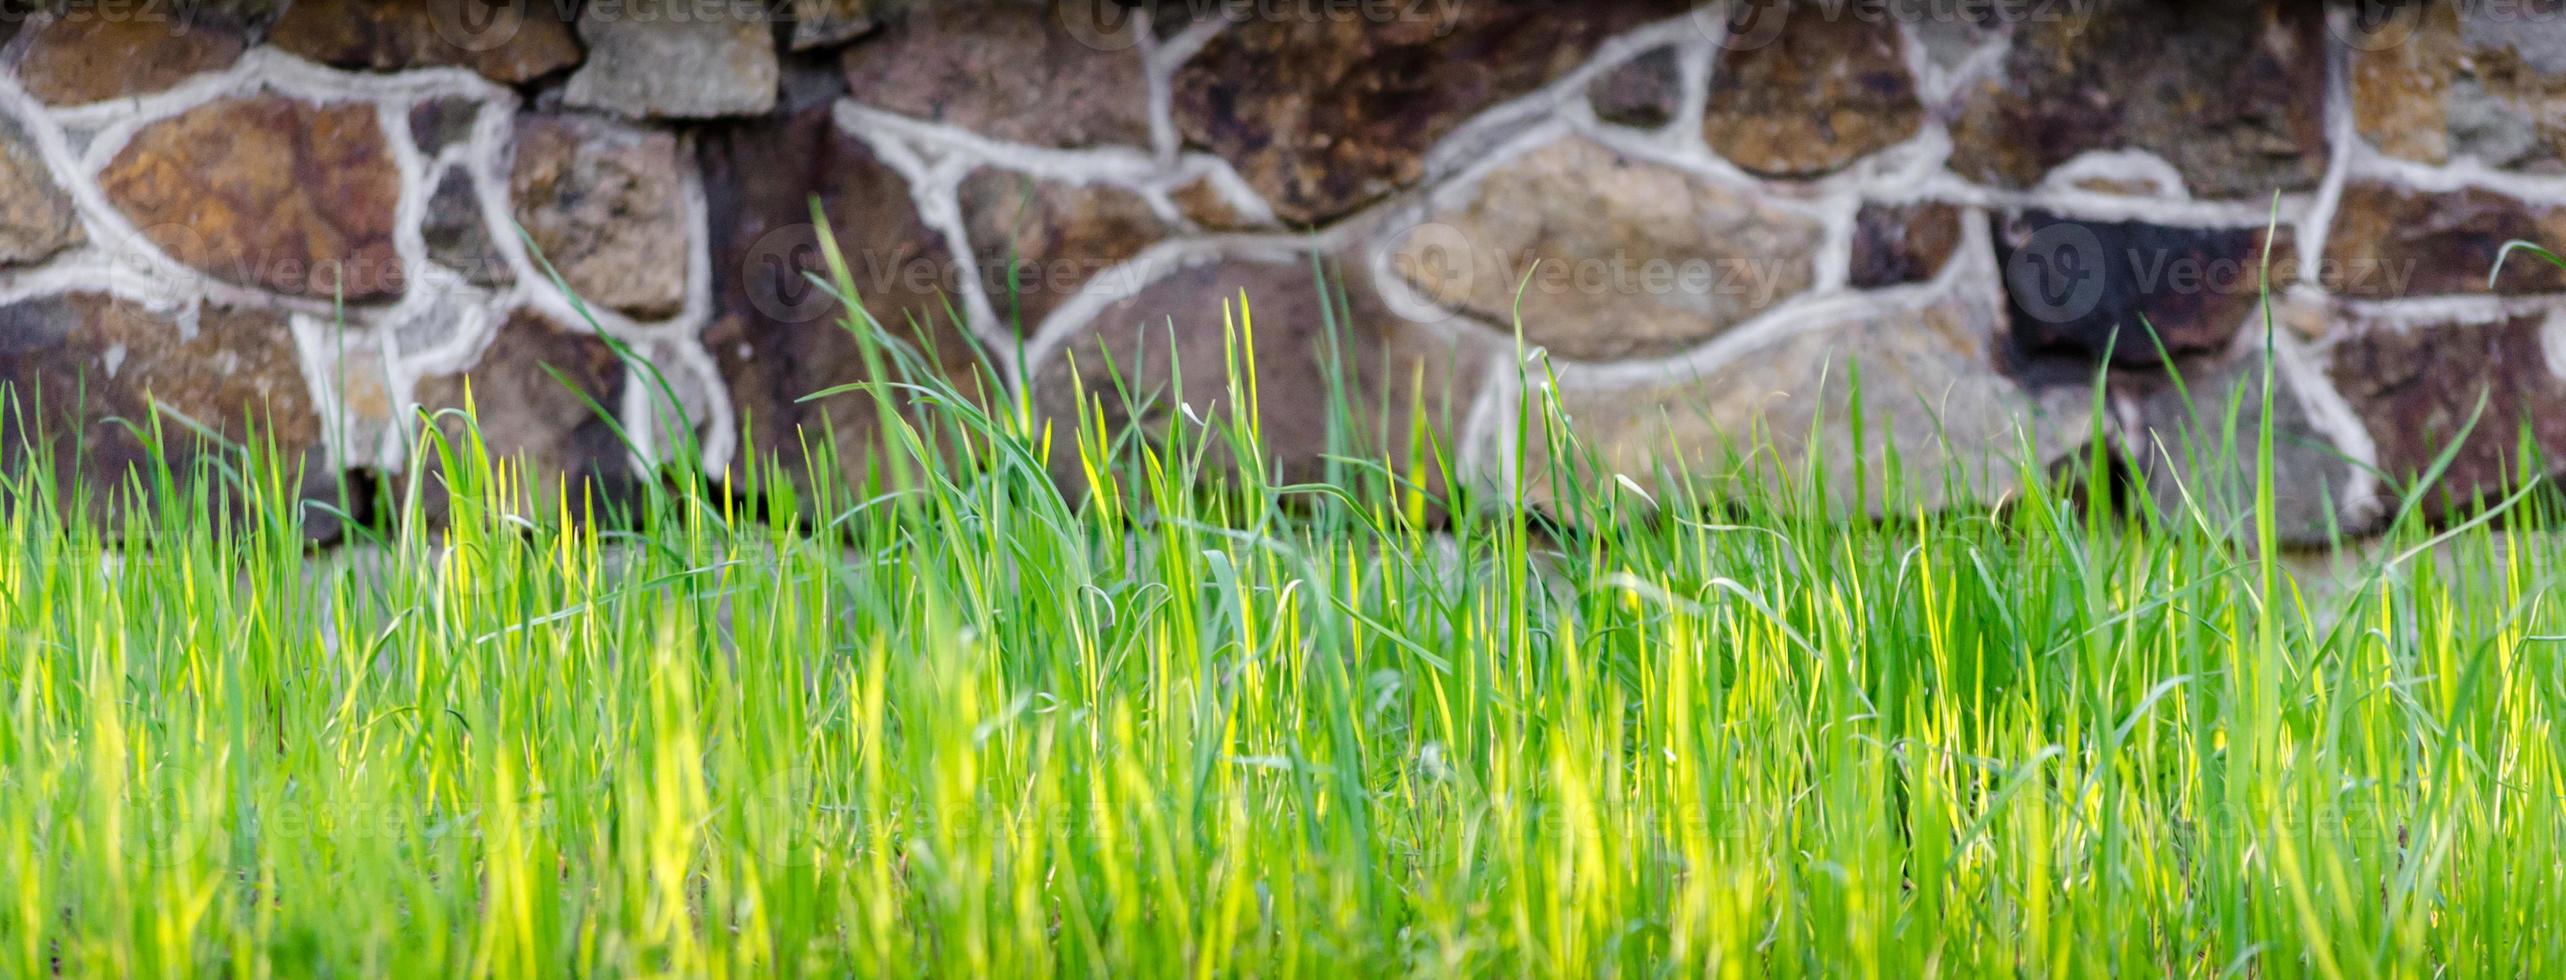 vers groen gras op stenen muur achtergrond close-up foto